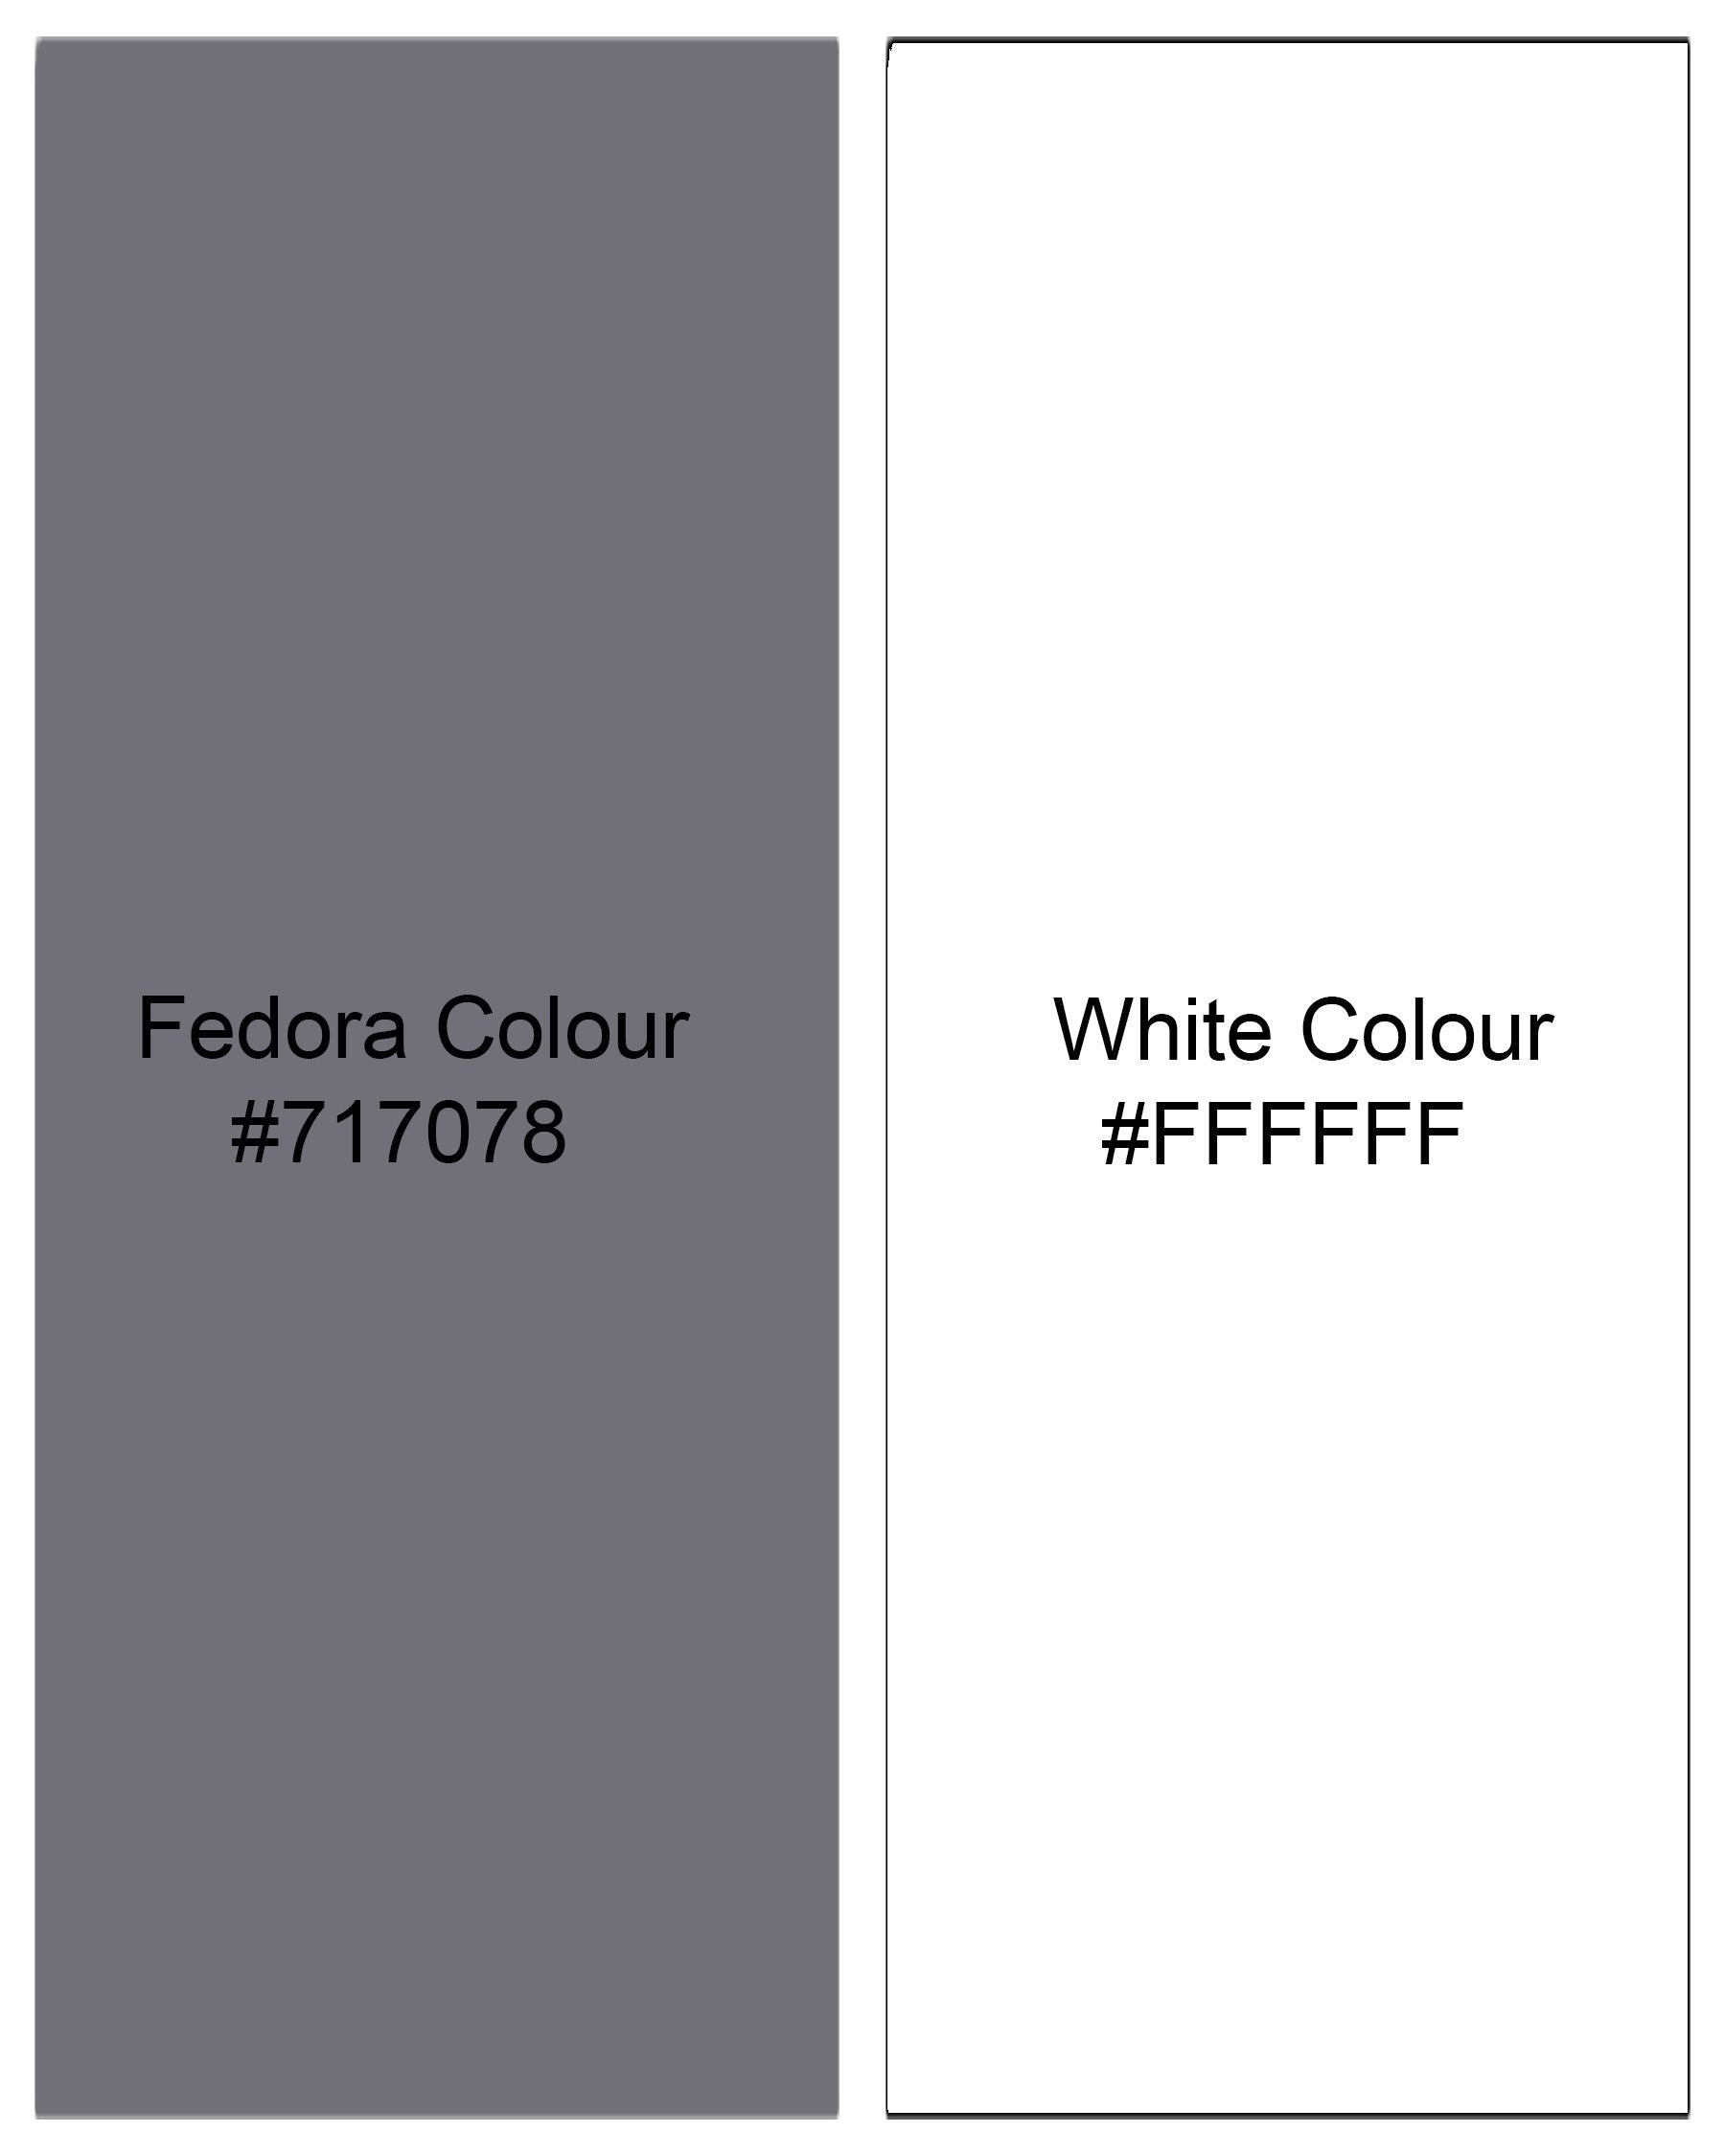 Fedora Gray and White Pin Striped Royal Oxford Shirt